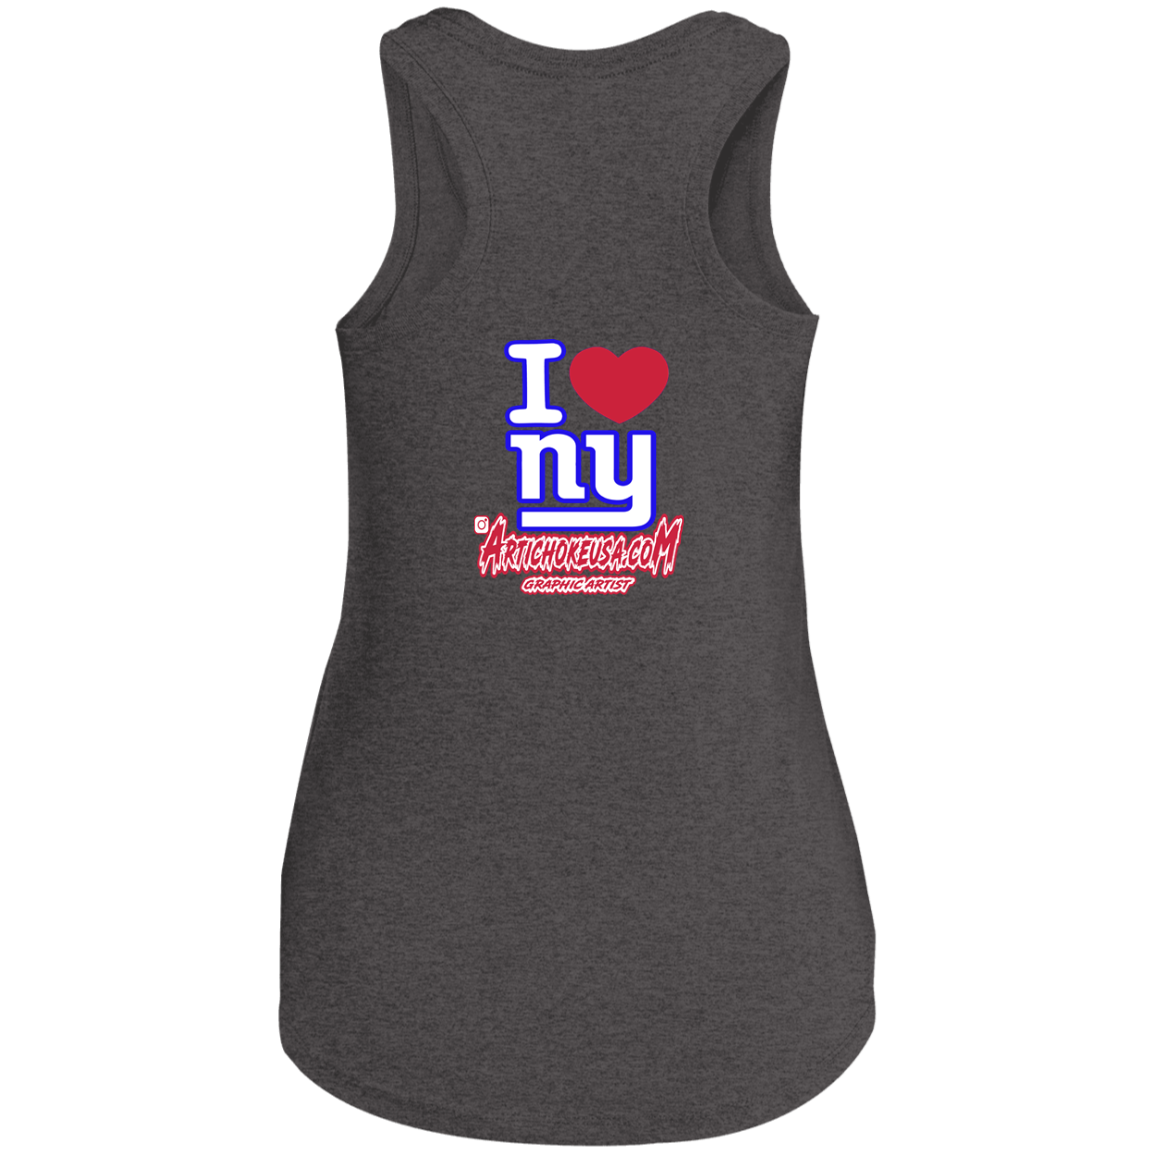 ArtichokeUSA Custom Design. I heart New York Giants. NY Giants Football Fan Art. Ladies' Perfect Tri Racerback Tank